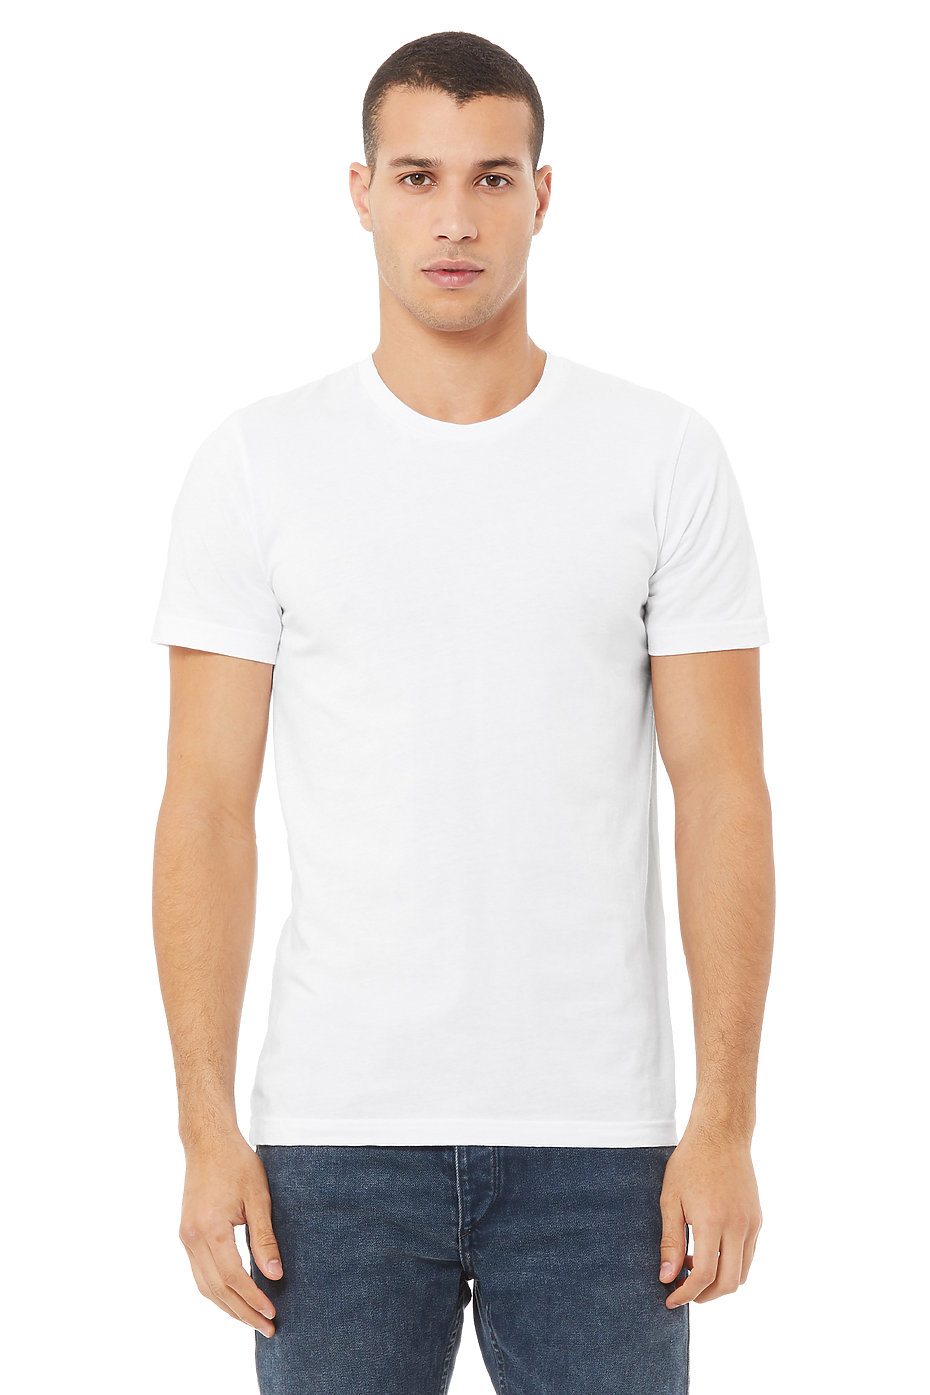 Jersey T Shirts | Mens Wholesale Clothing | Bulk, Plain Blank T Shirts ...